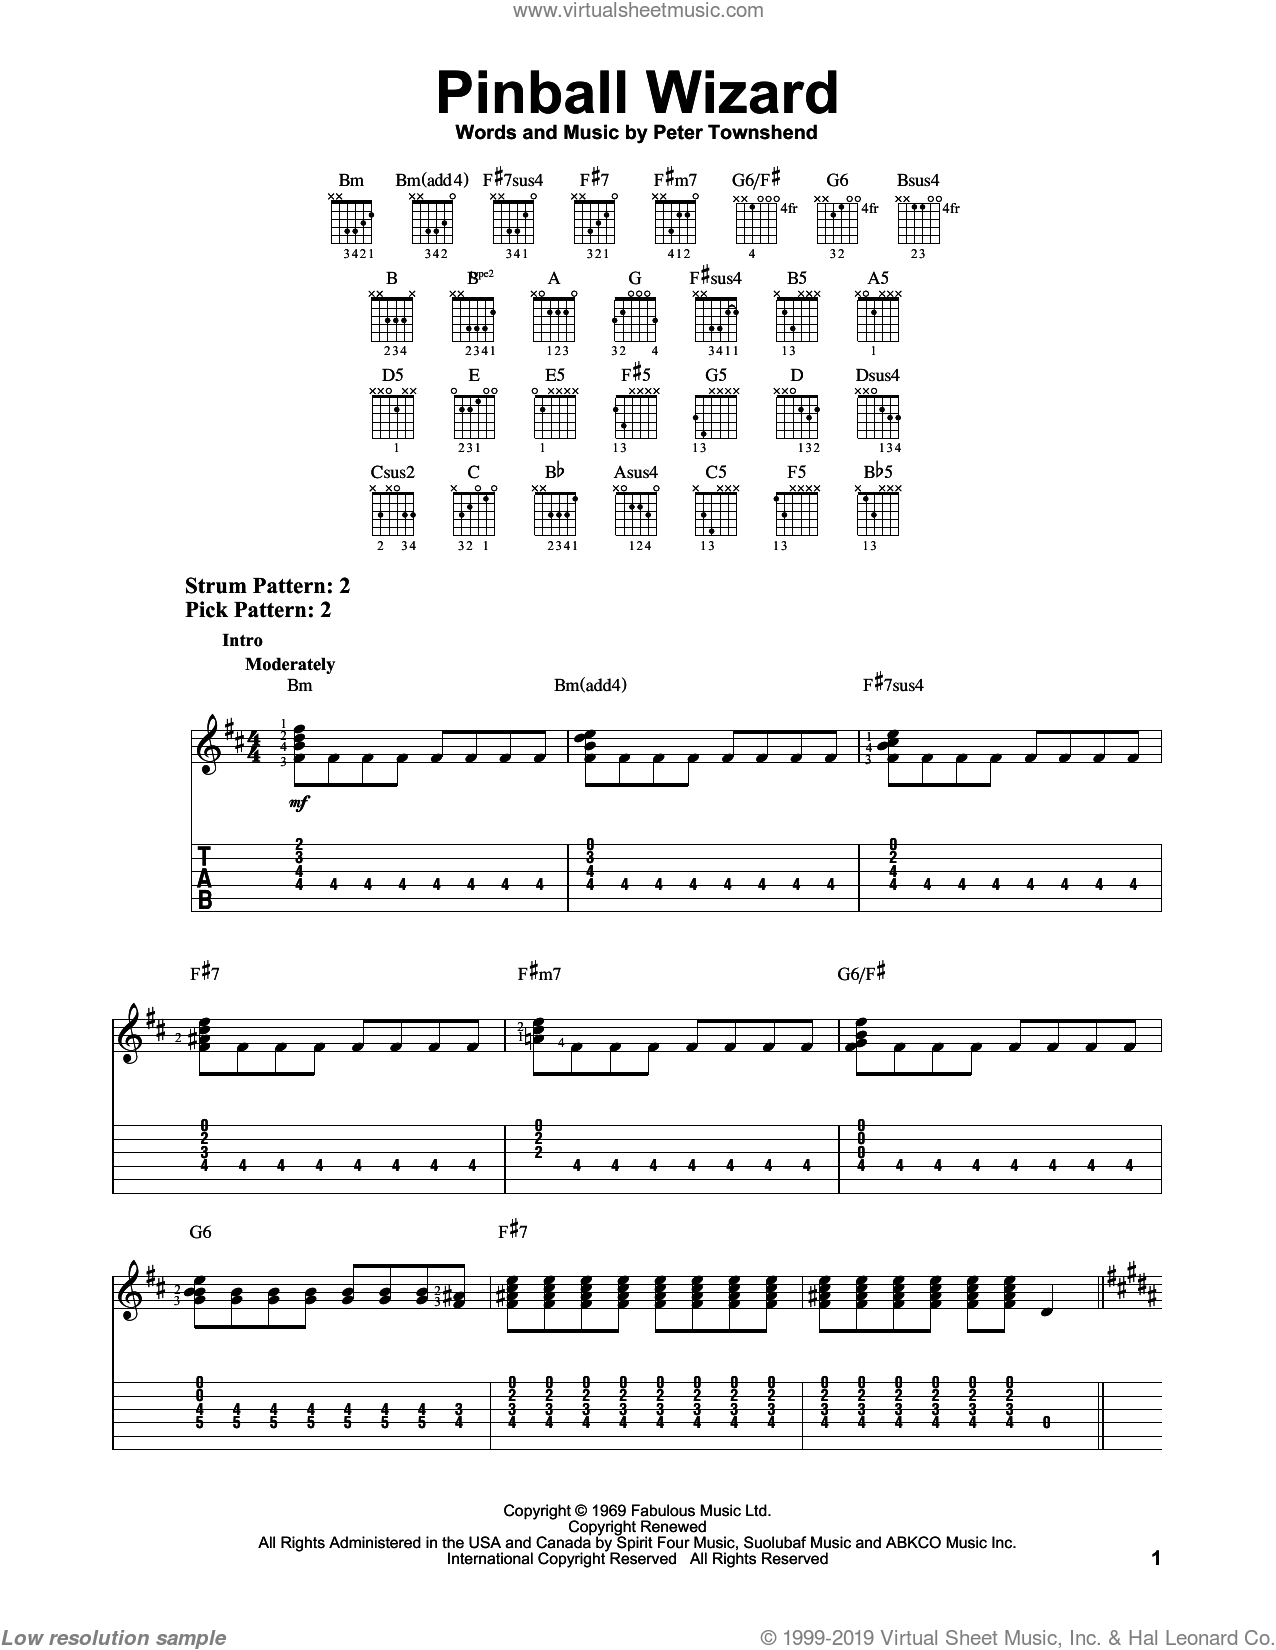 Pinball Wizard, by The Byrds - lyrics with pdf